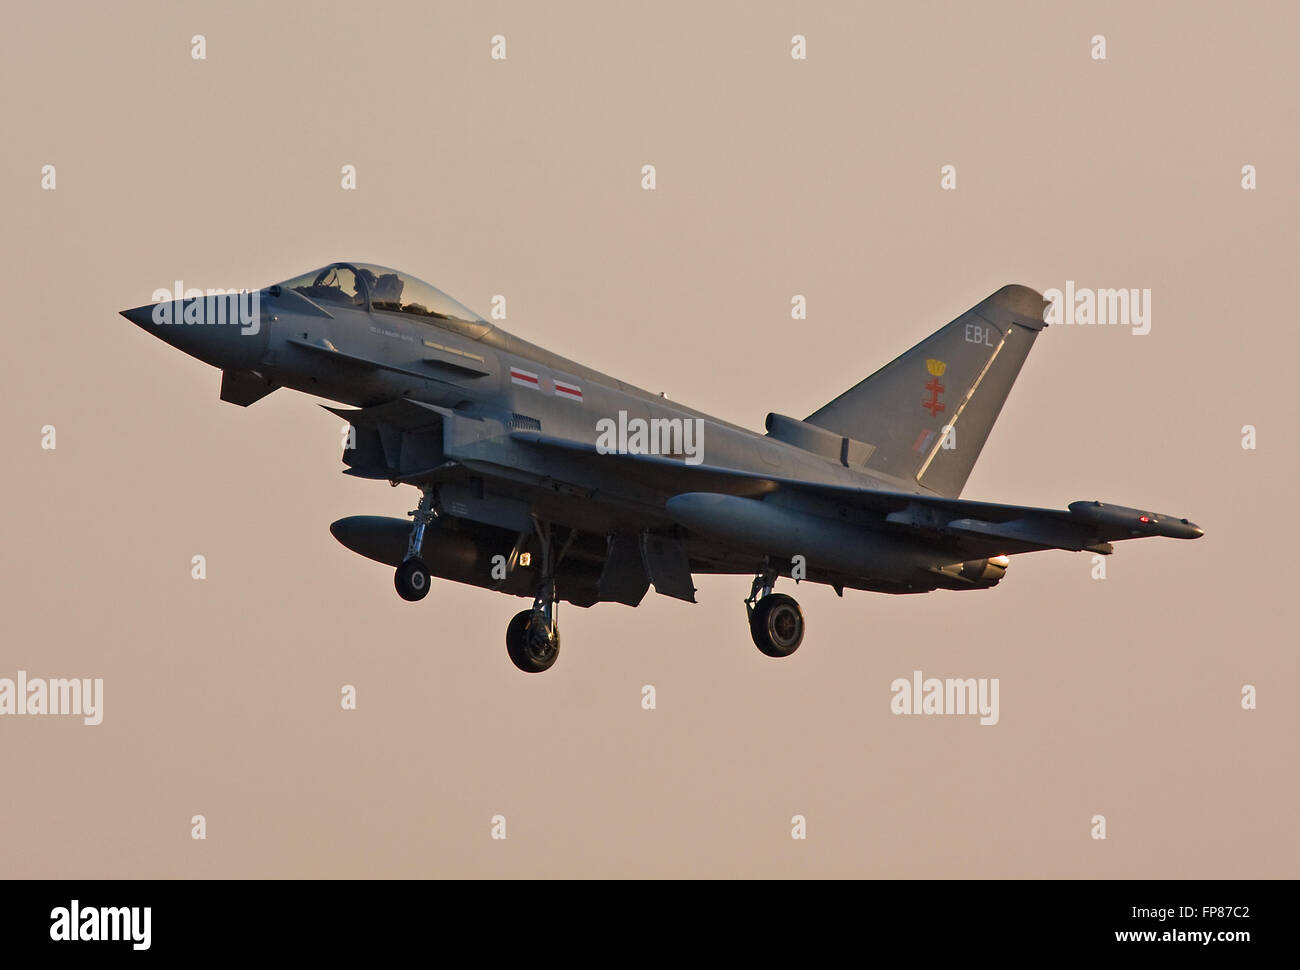 No.41(R) Squadron Typhoon landing at sunset Stock Photo